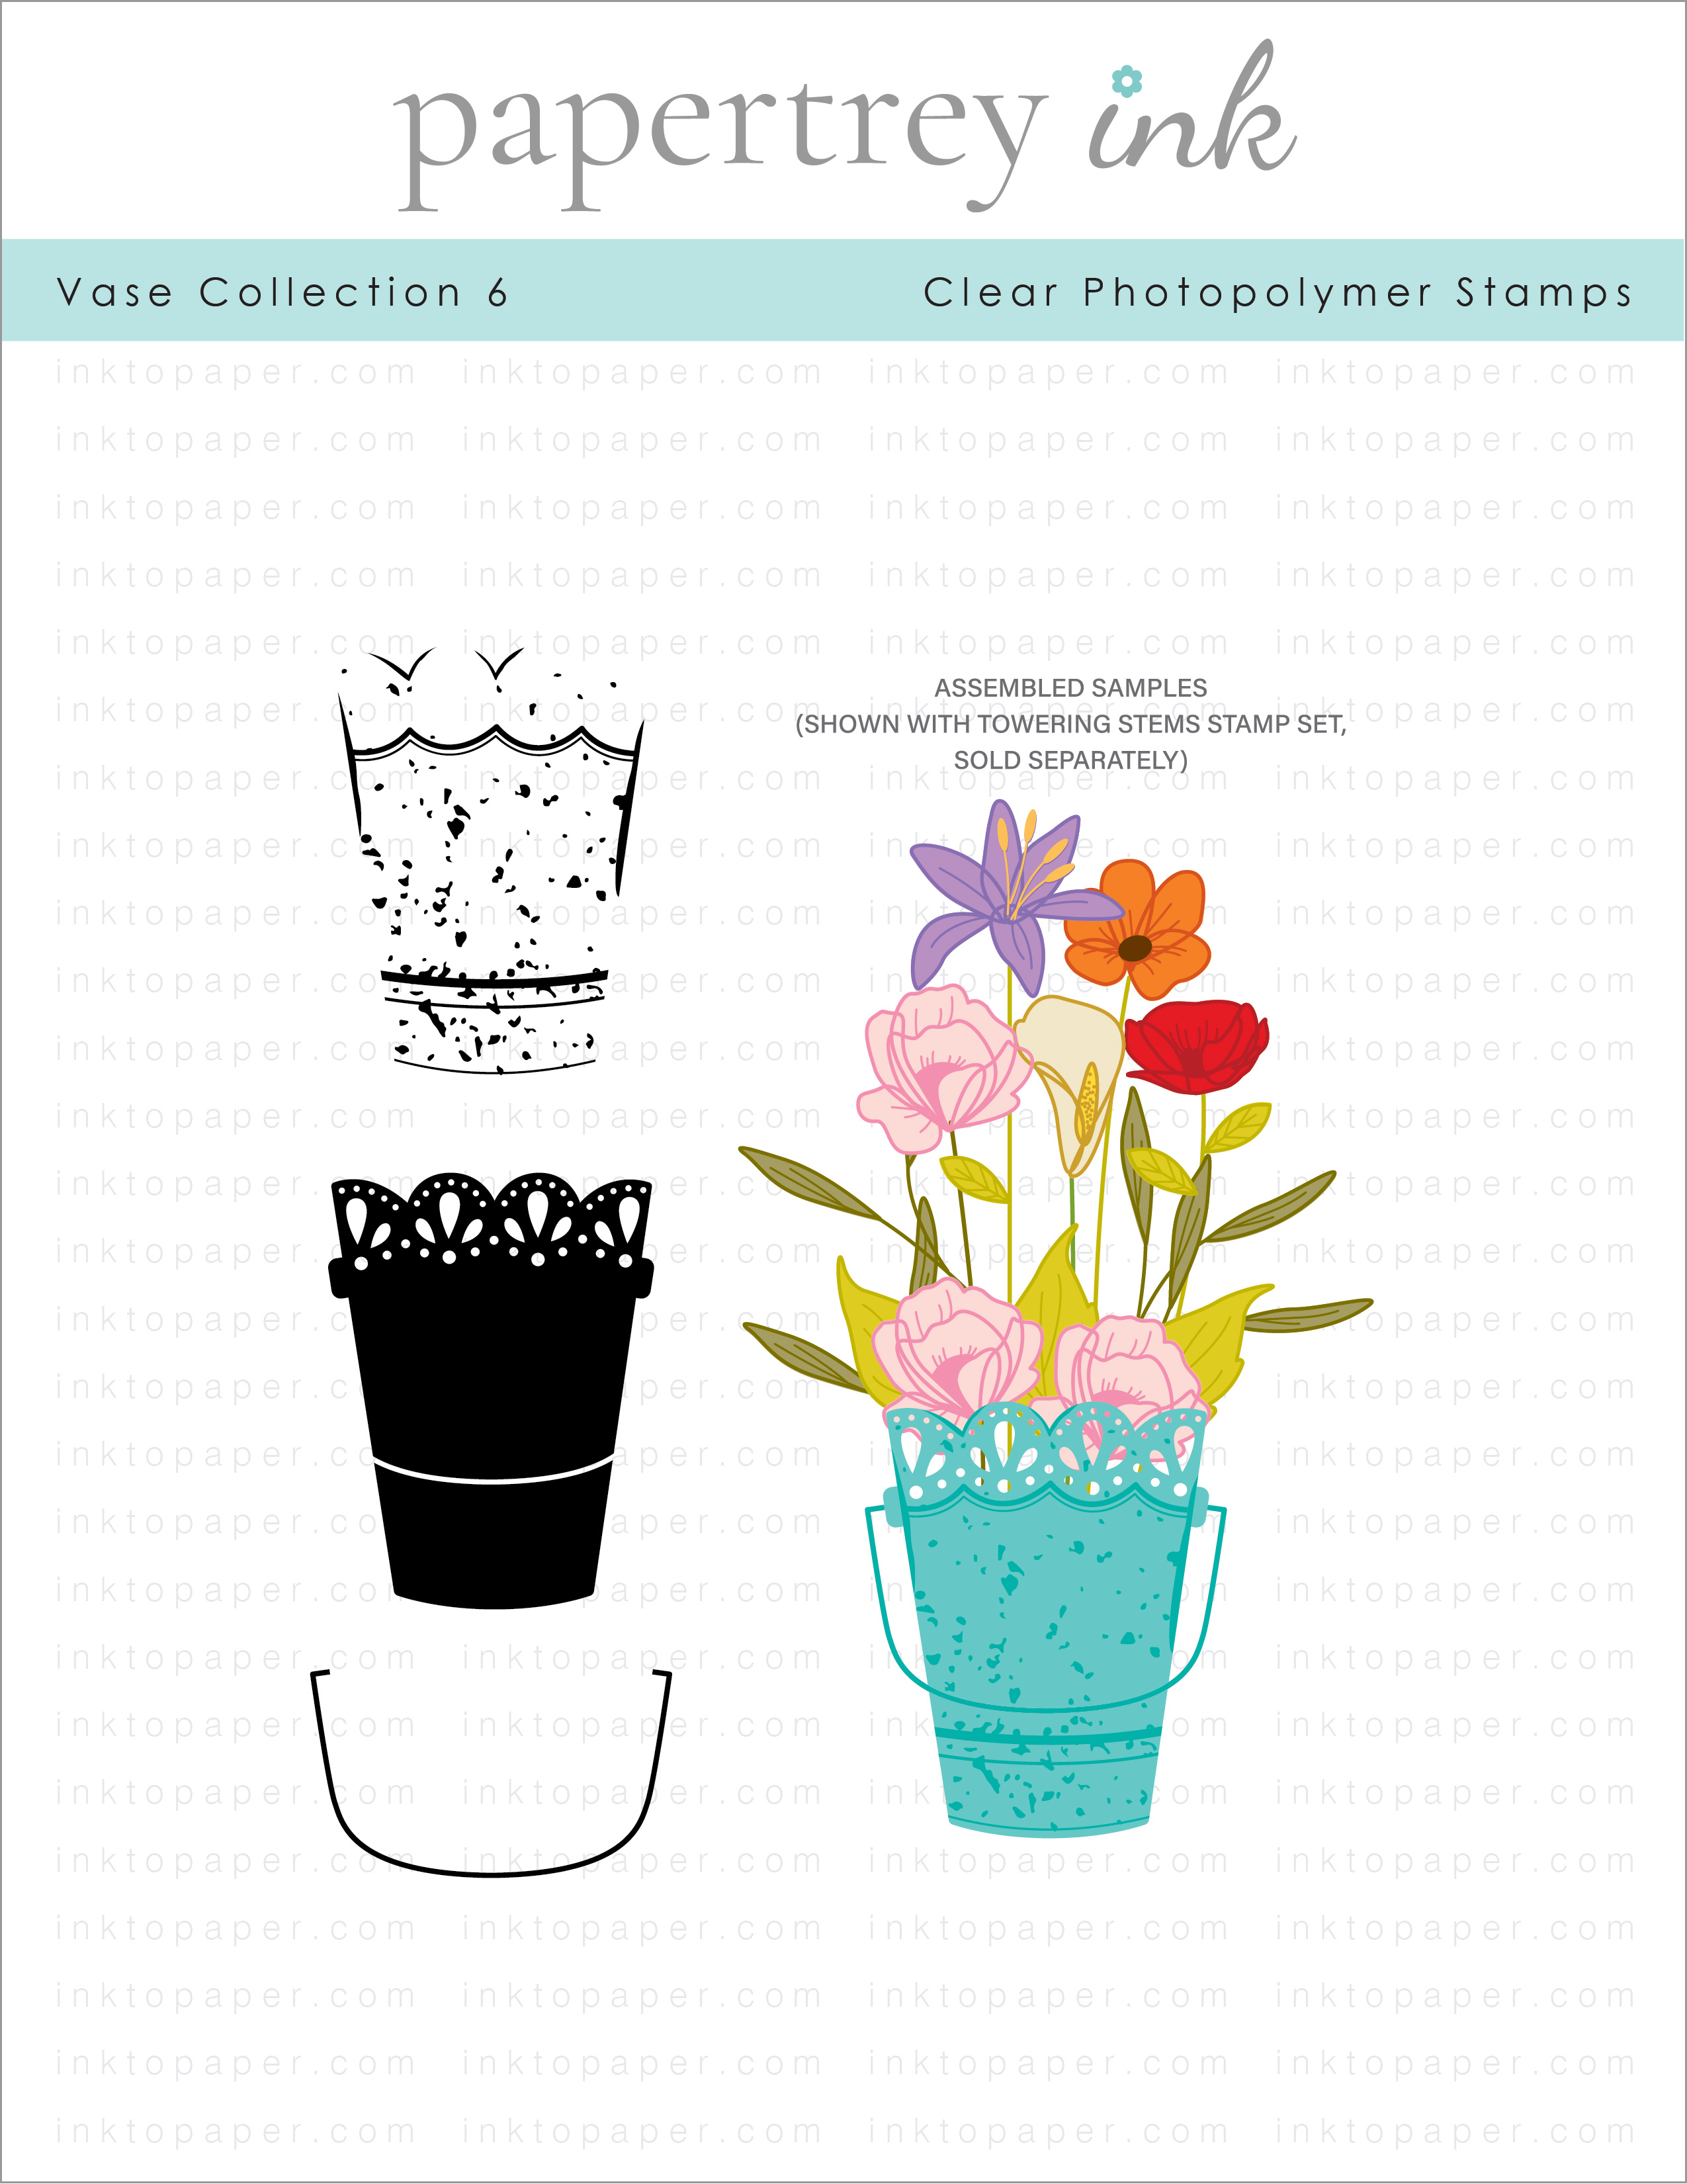 Vase Collection 6 Mini Stamp Set: Papertrey Ink